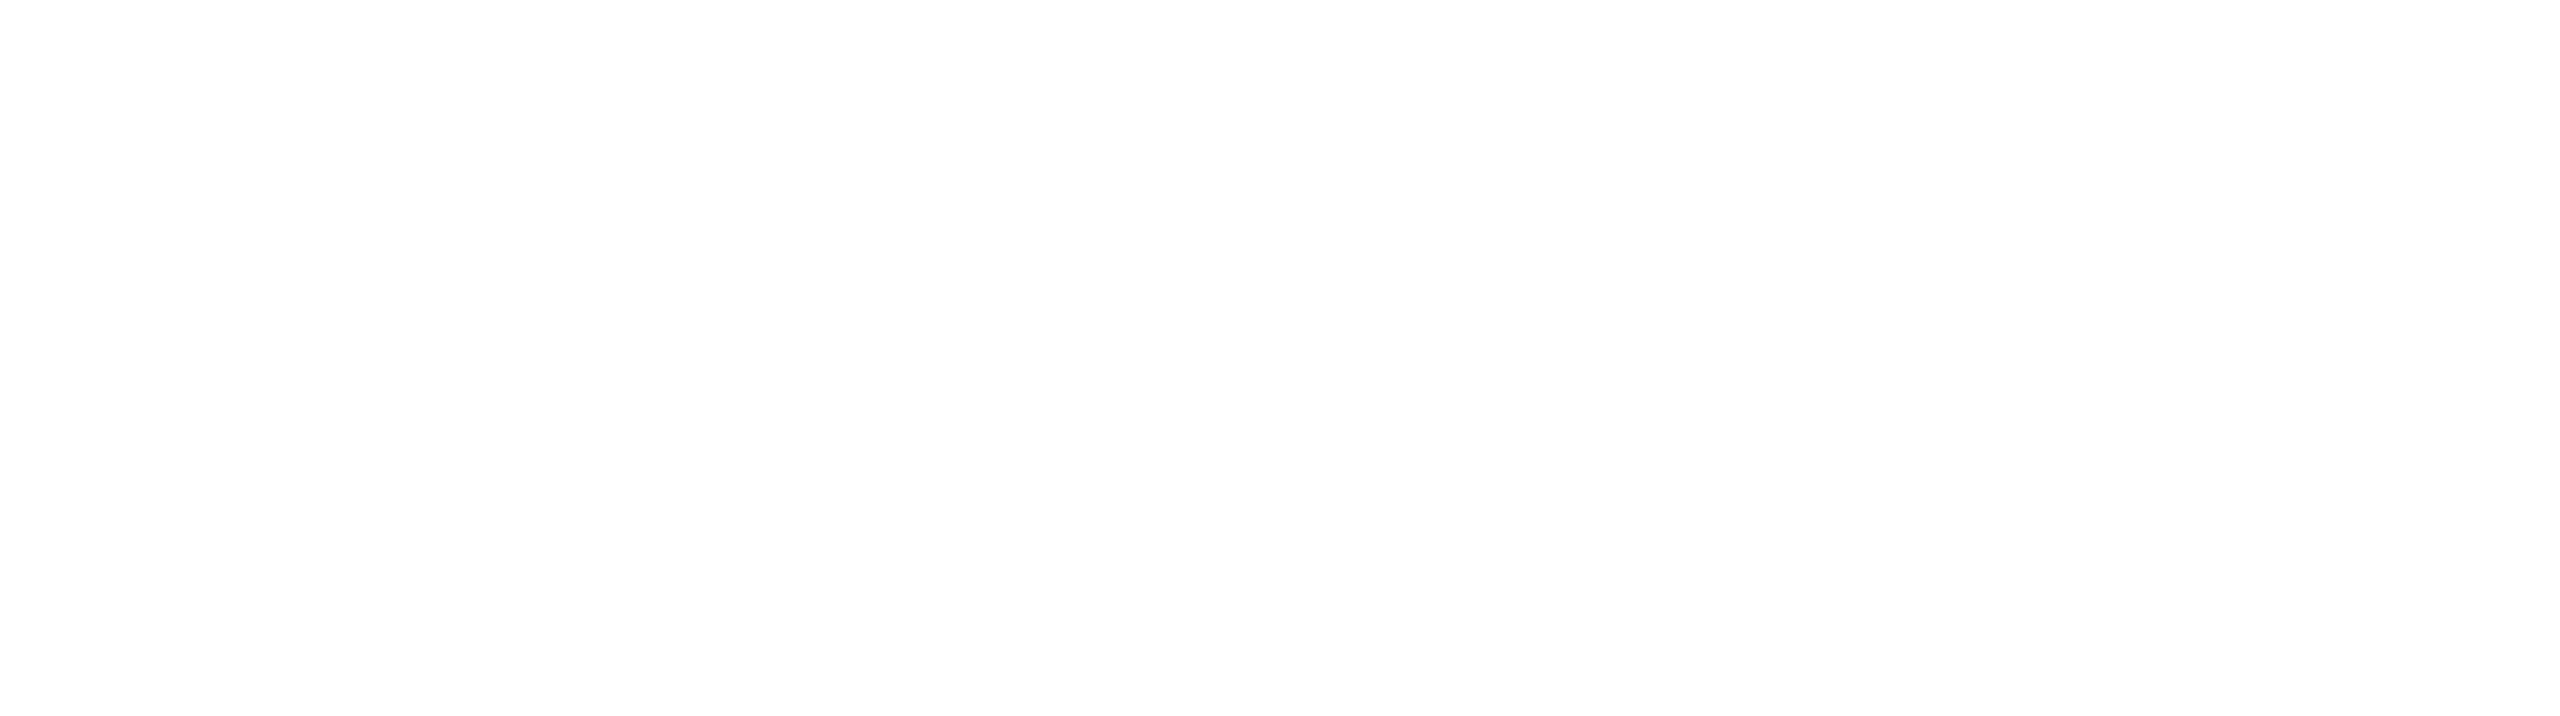 Double Oak Bourbon